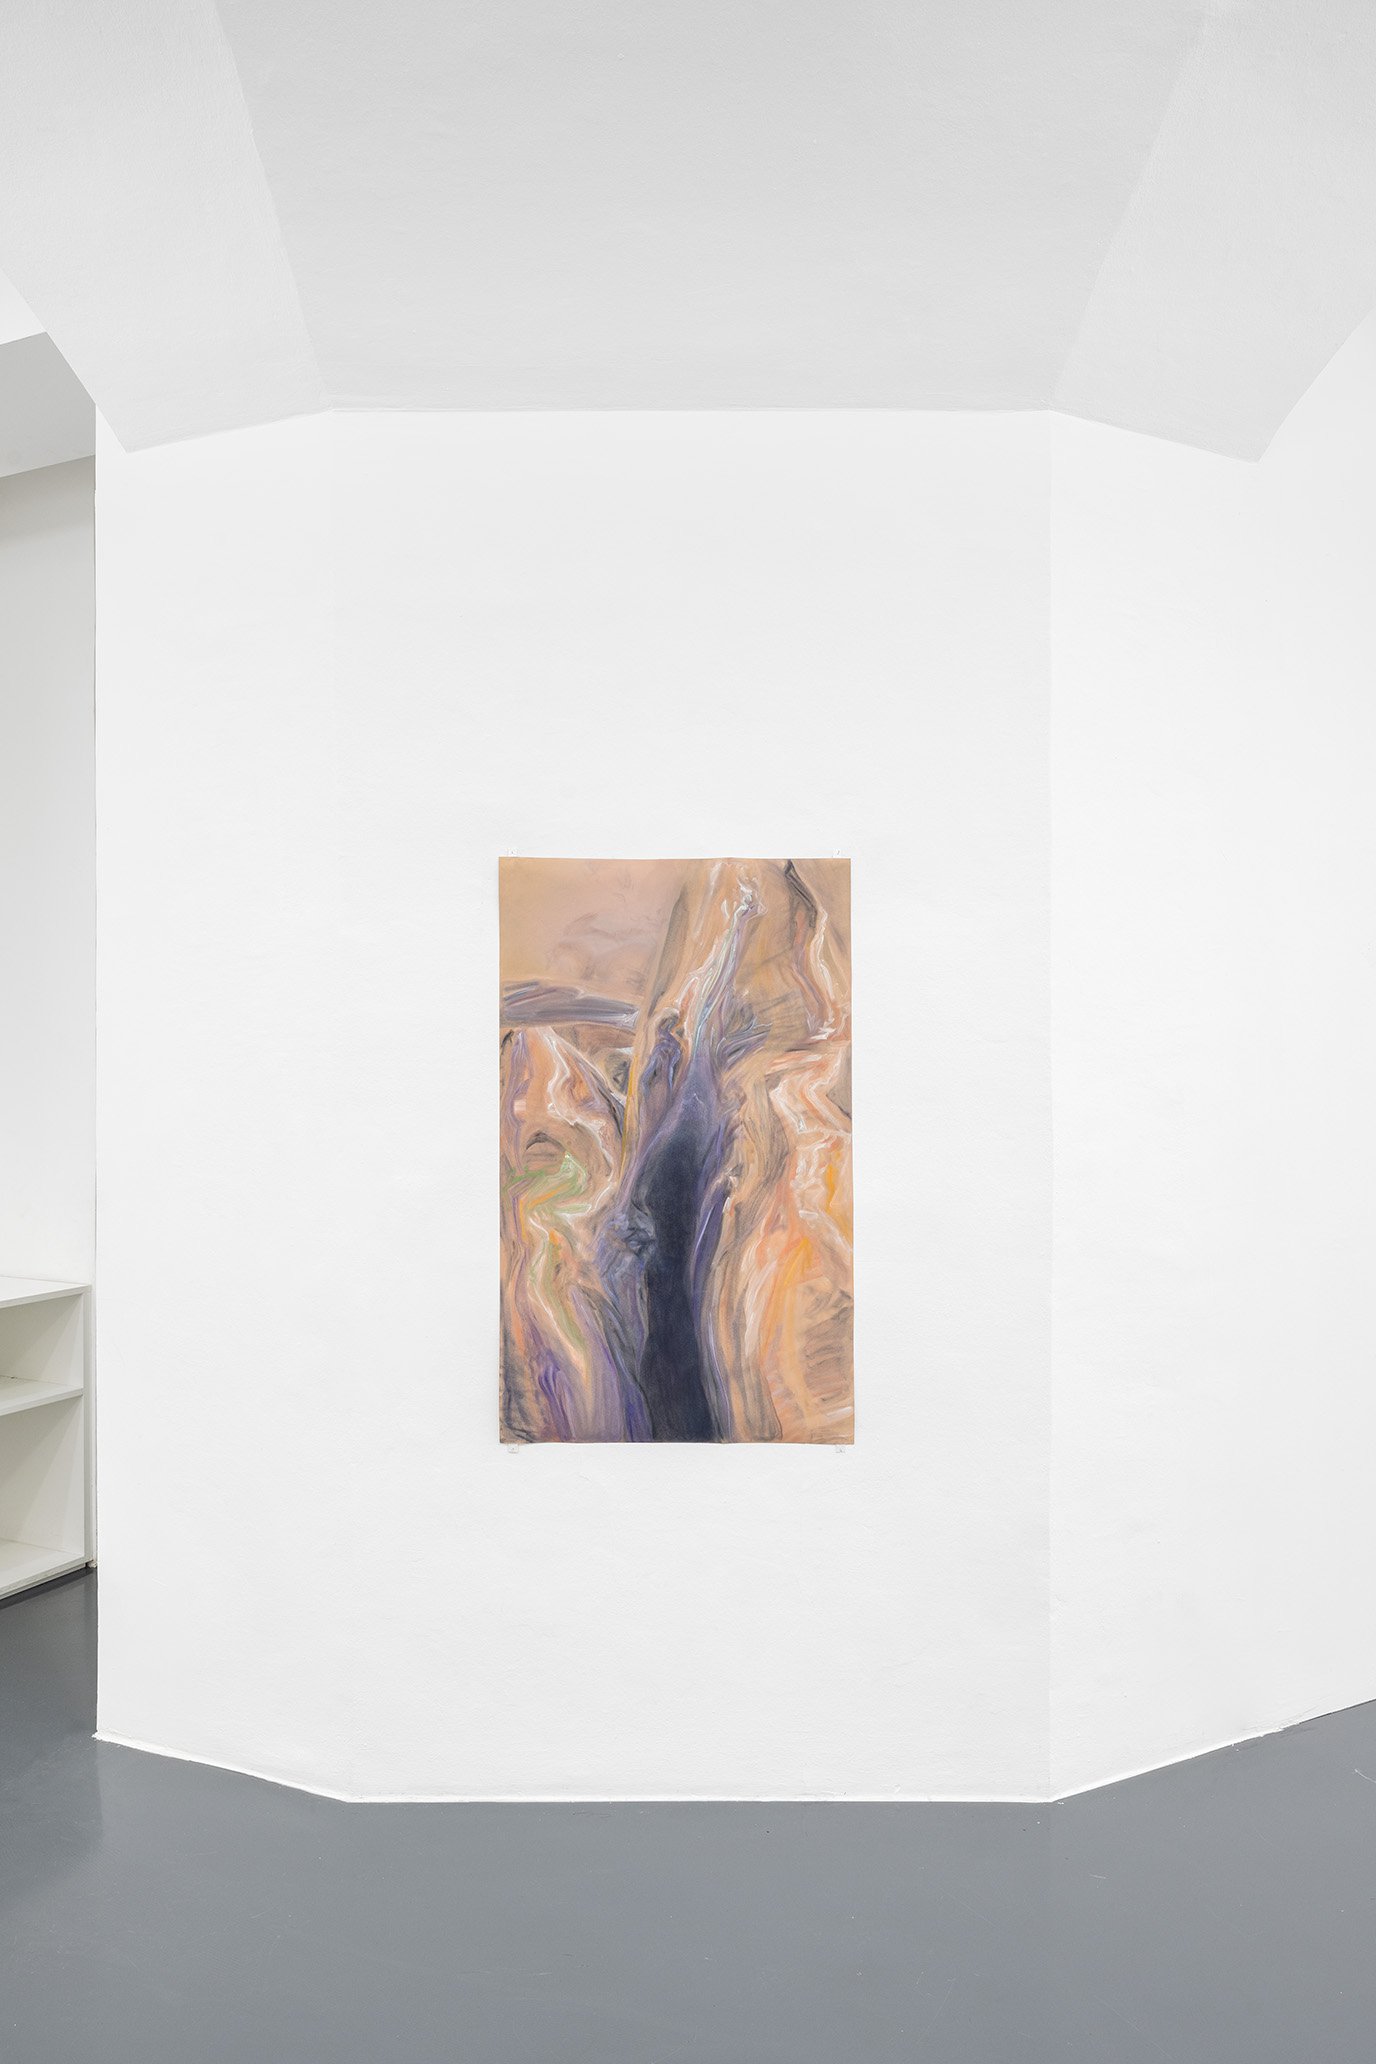 Evelyn PlaschgSine/Threshold, 2022Pigment on Paper130 x 78 cm